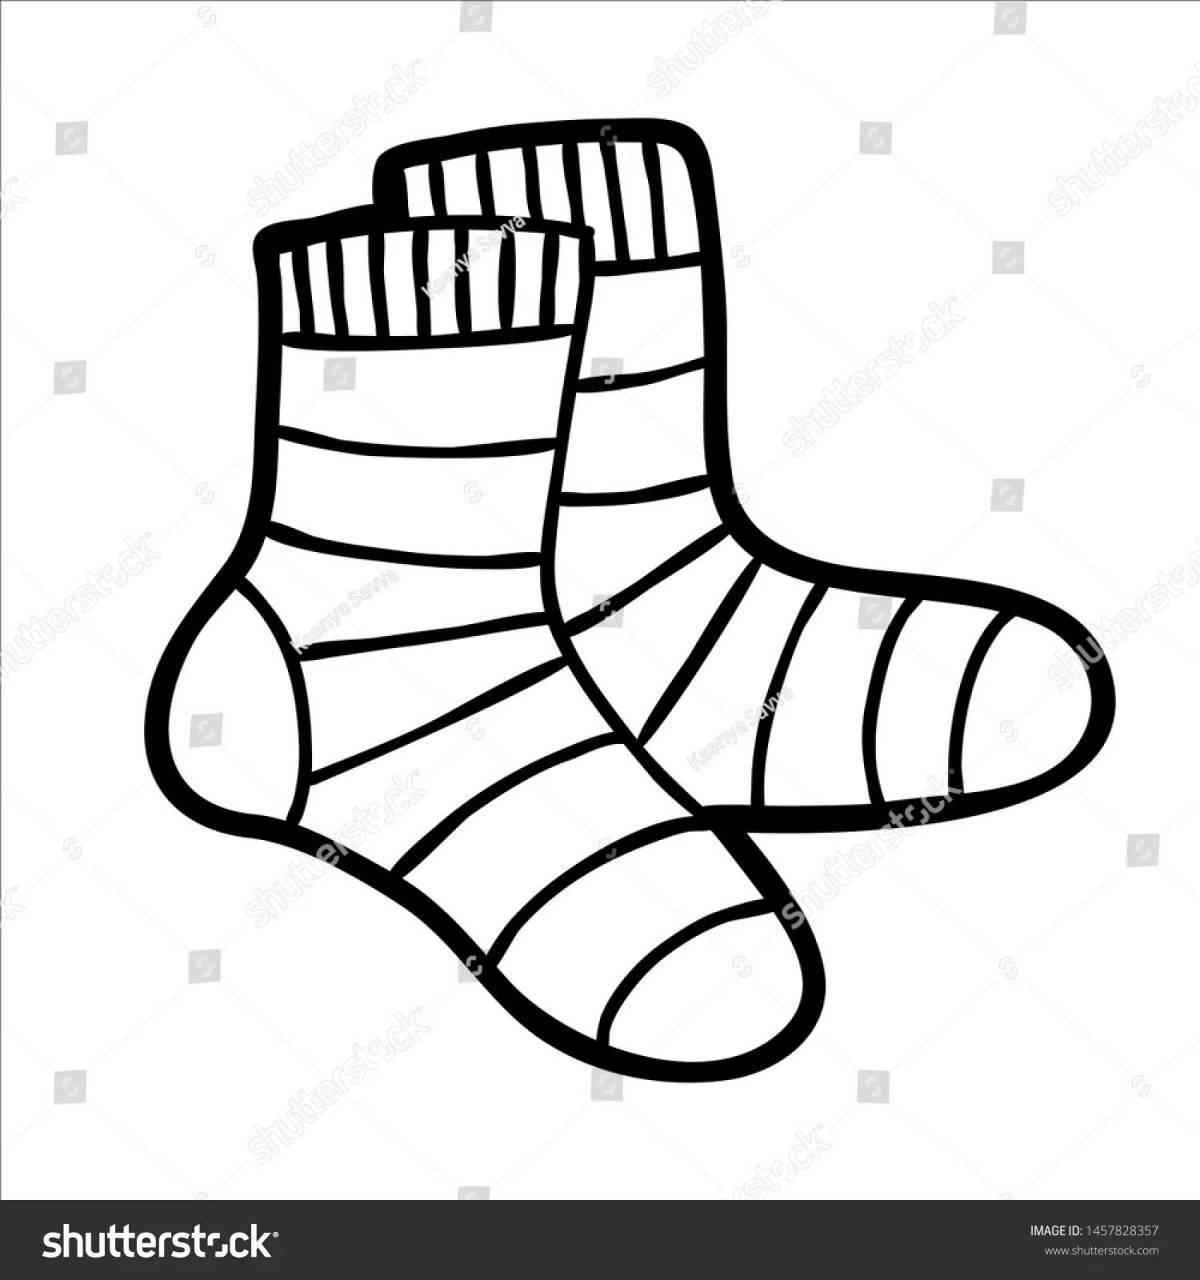 Coloring cute socks